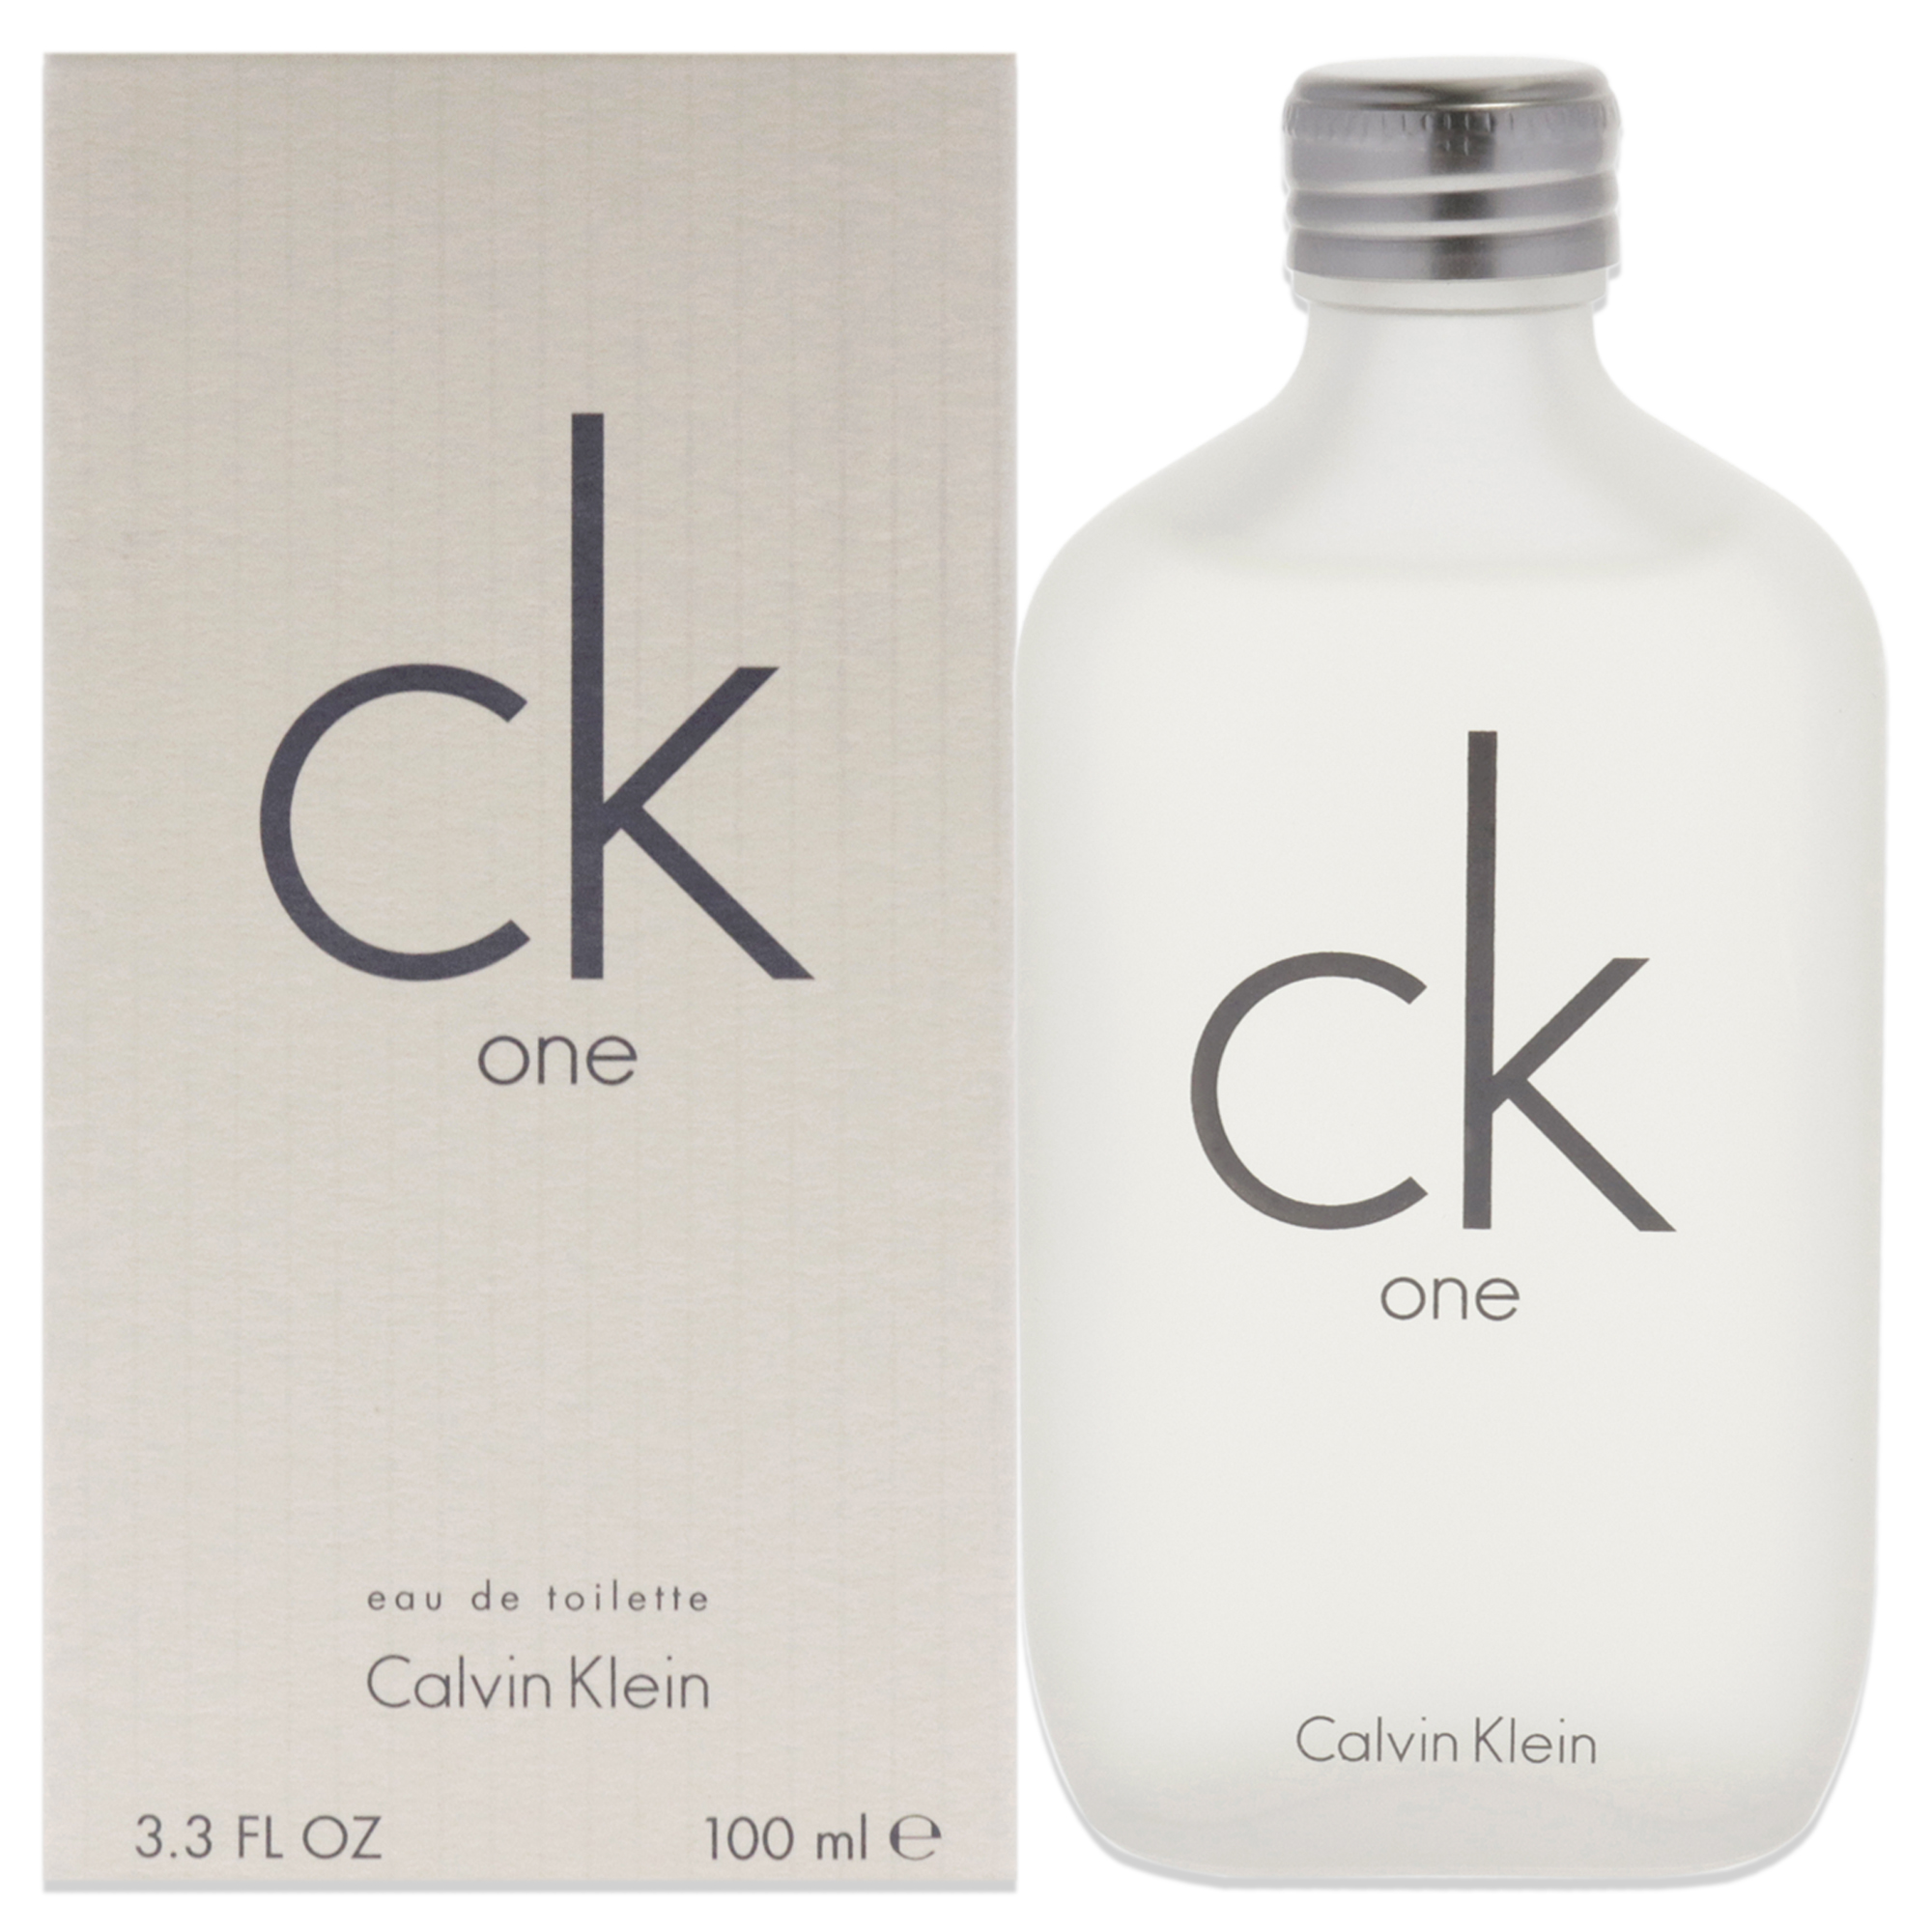 CK One by Calvin Klein for Unisex - 3.3 oz Eau...